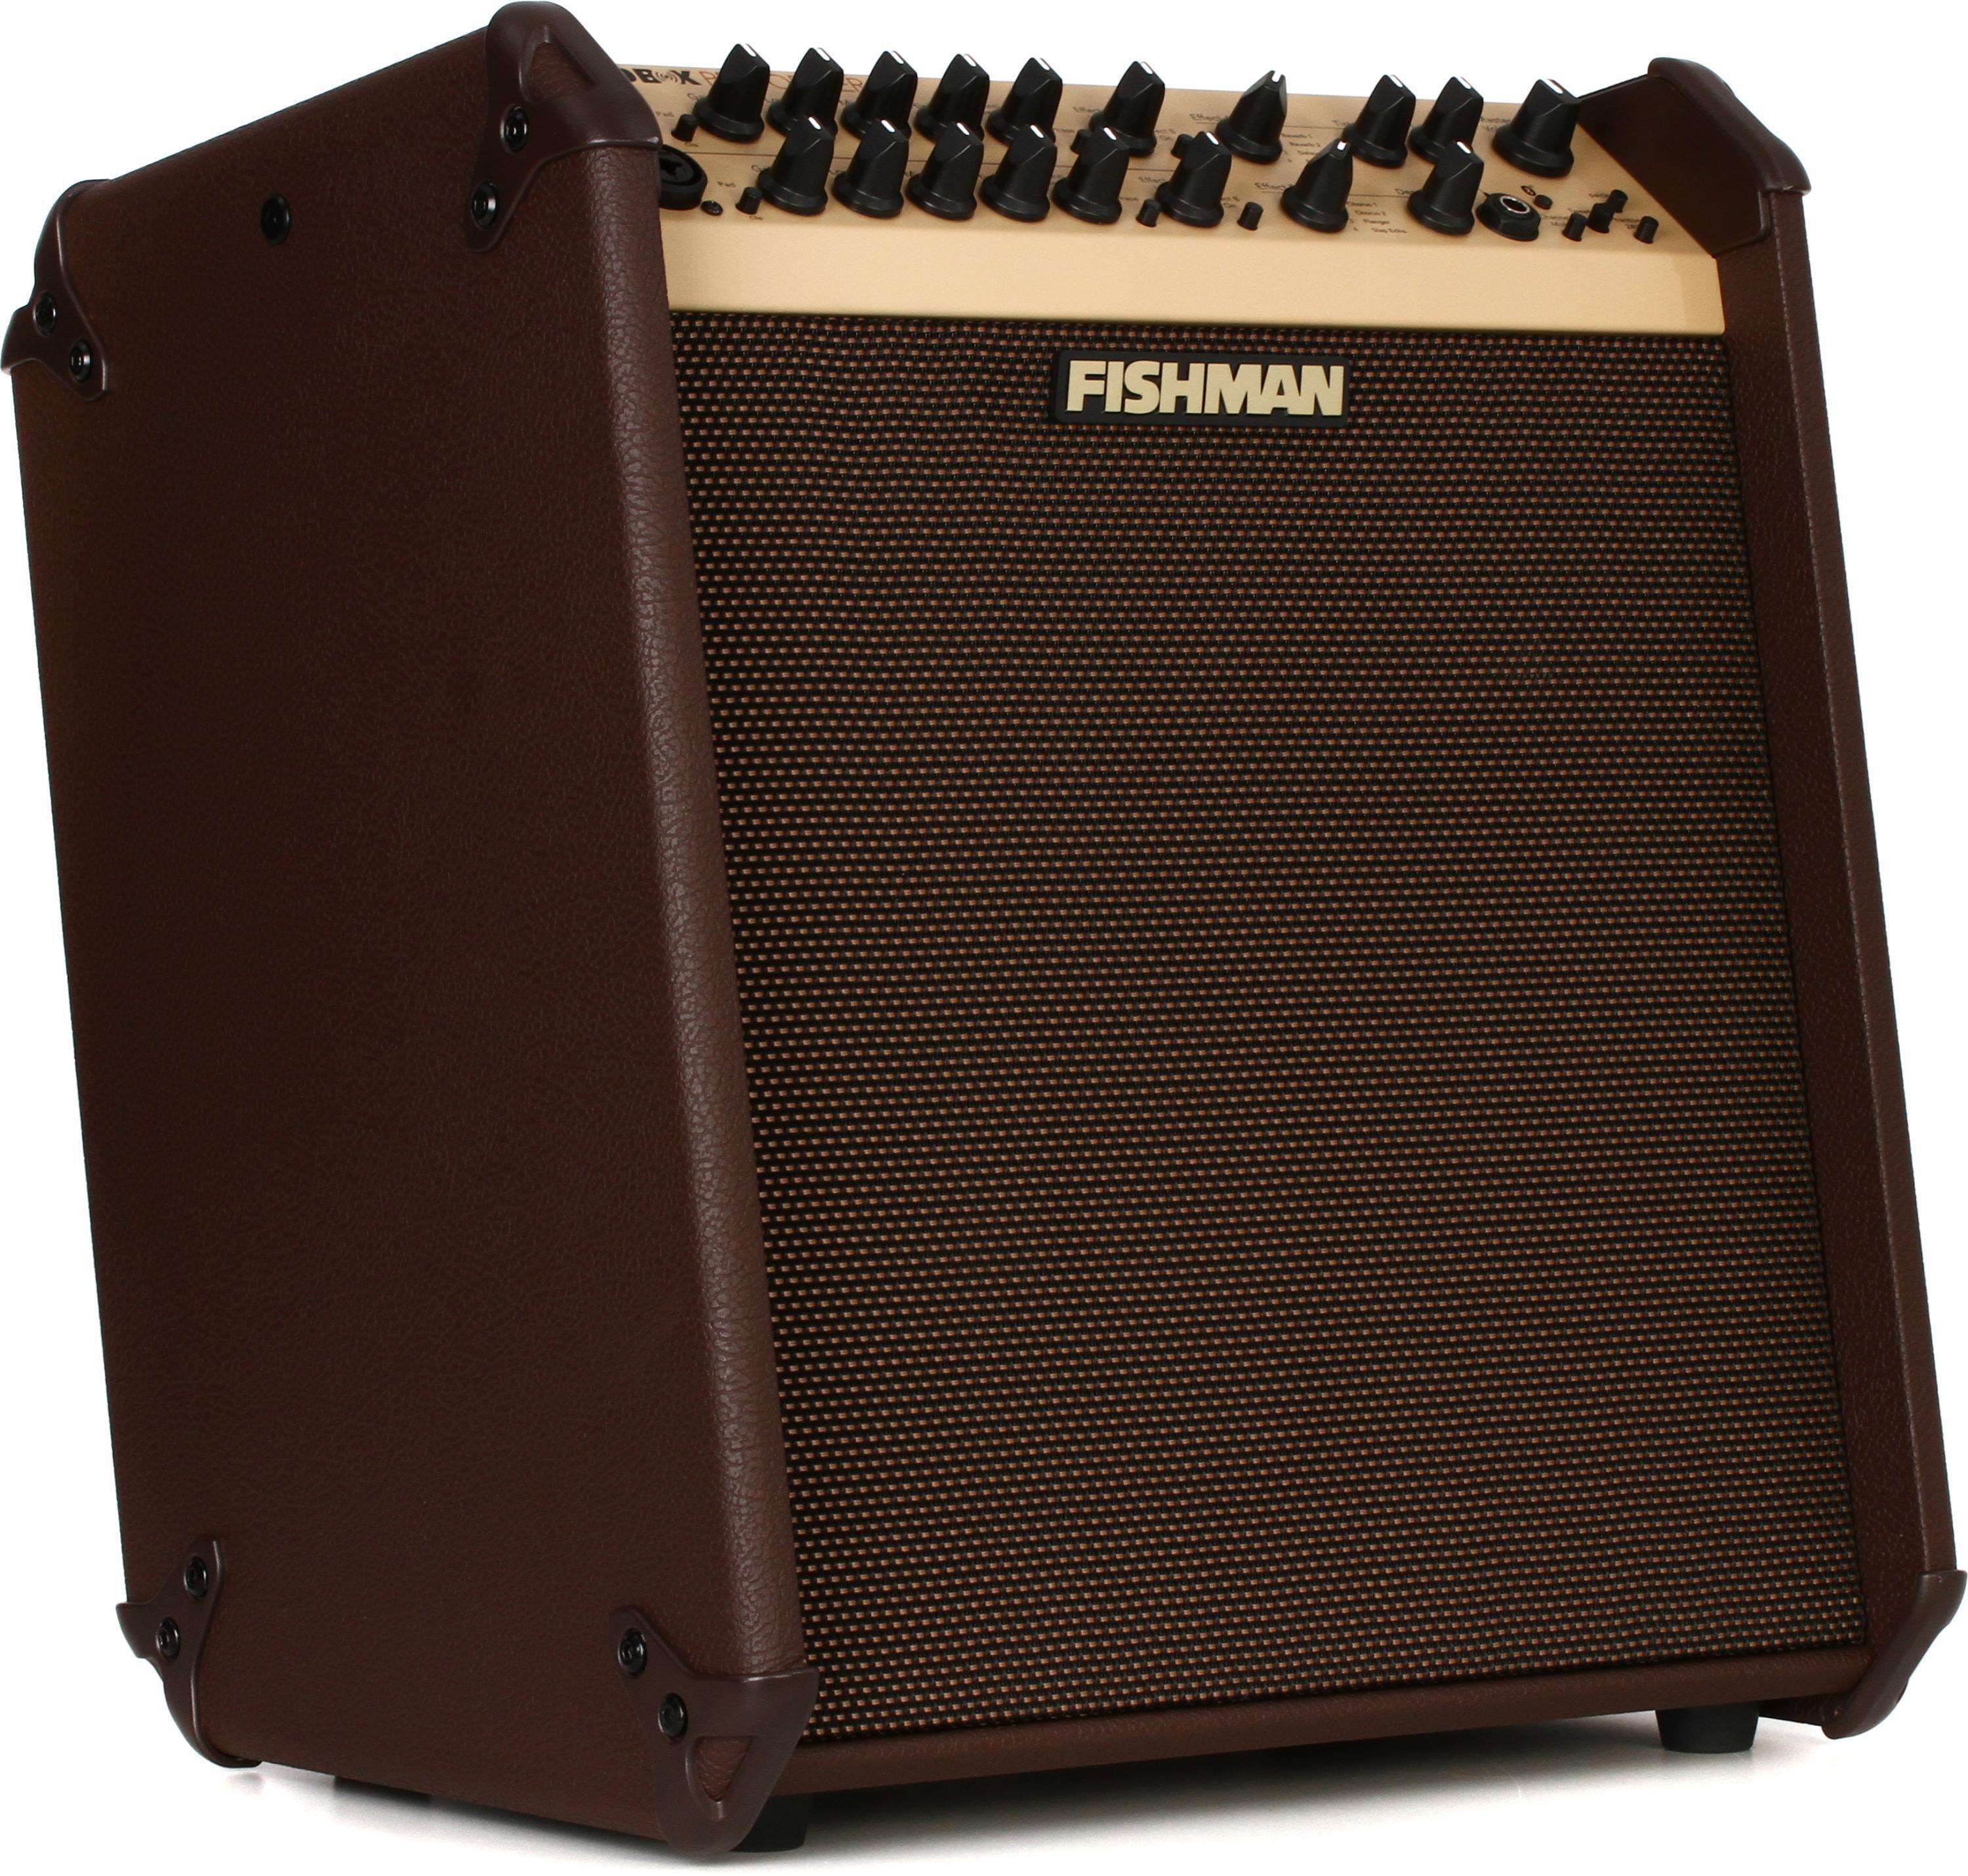 Bundled Item: Fishman Loudbox Performer BT 180-watt 1x5" + 1x8" Acoustic Combo Amp with Tweeter